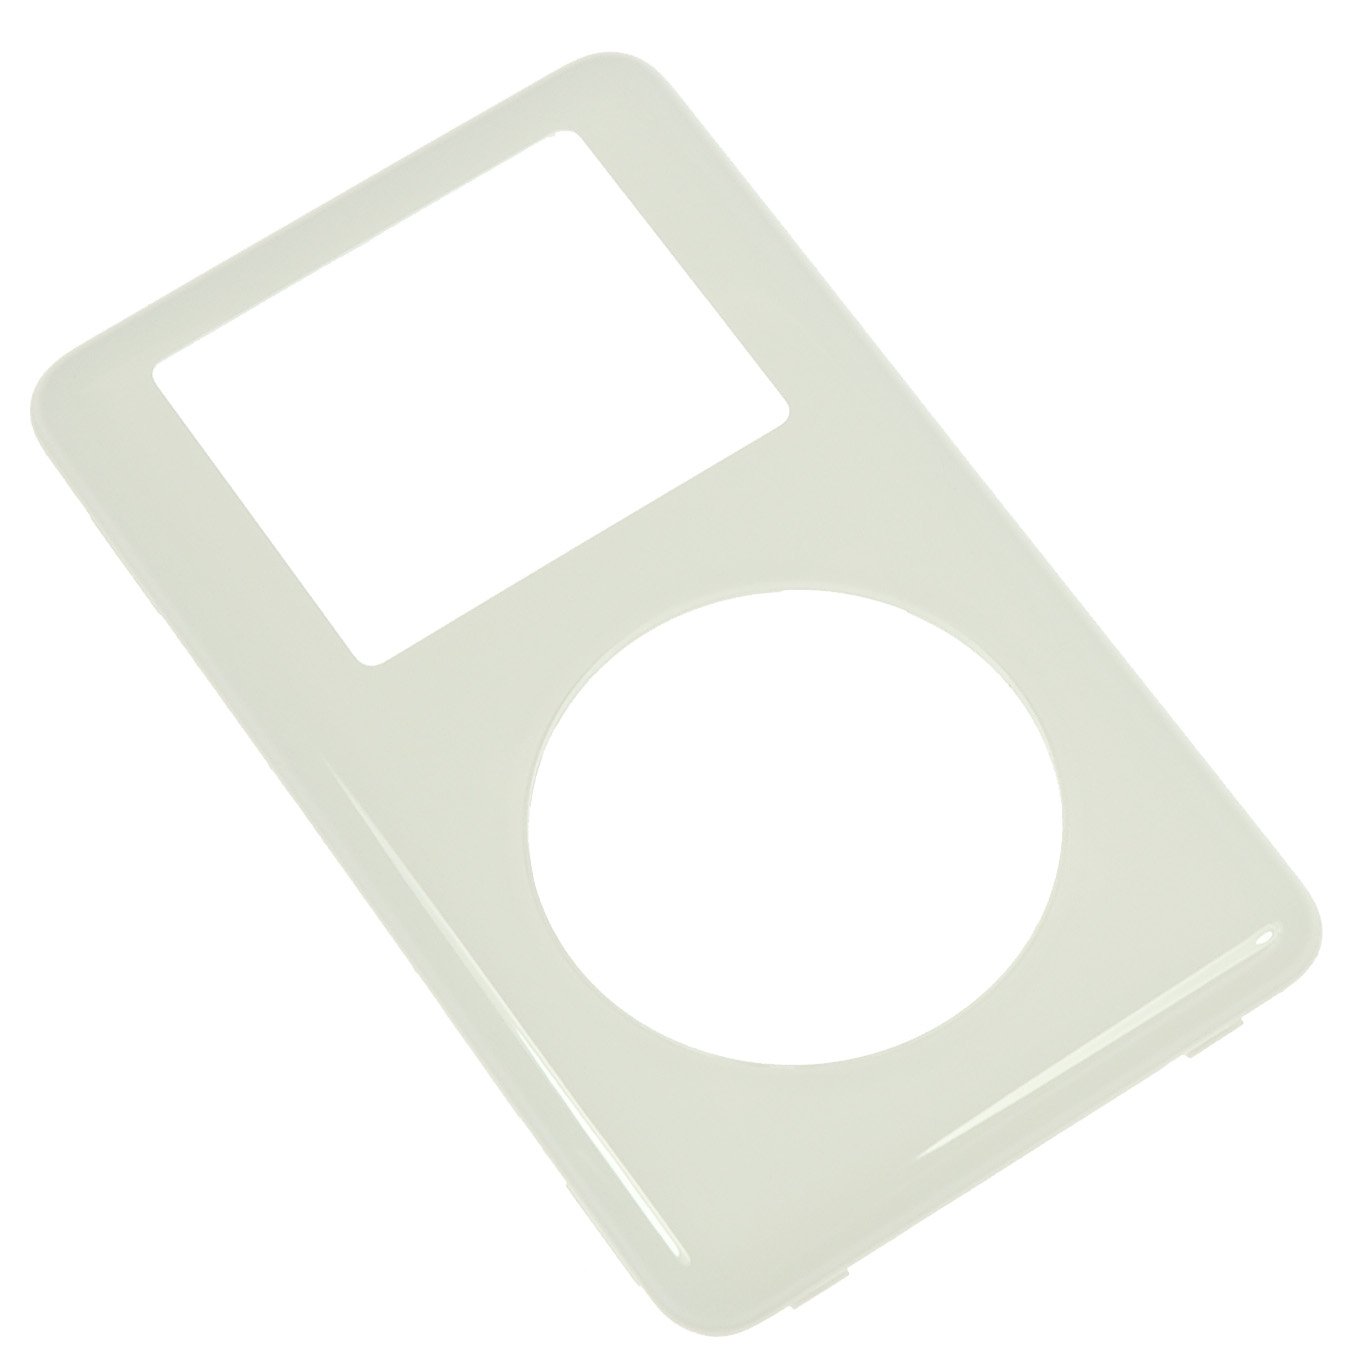 iPod 4G Front Panel Plastics